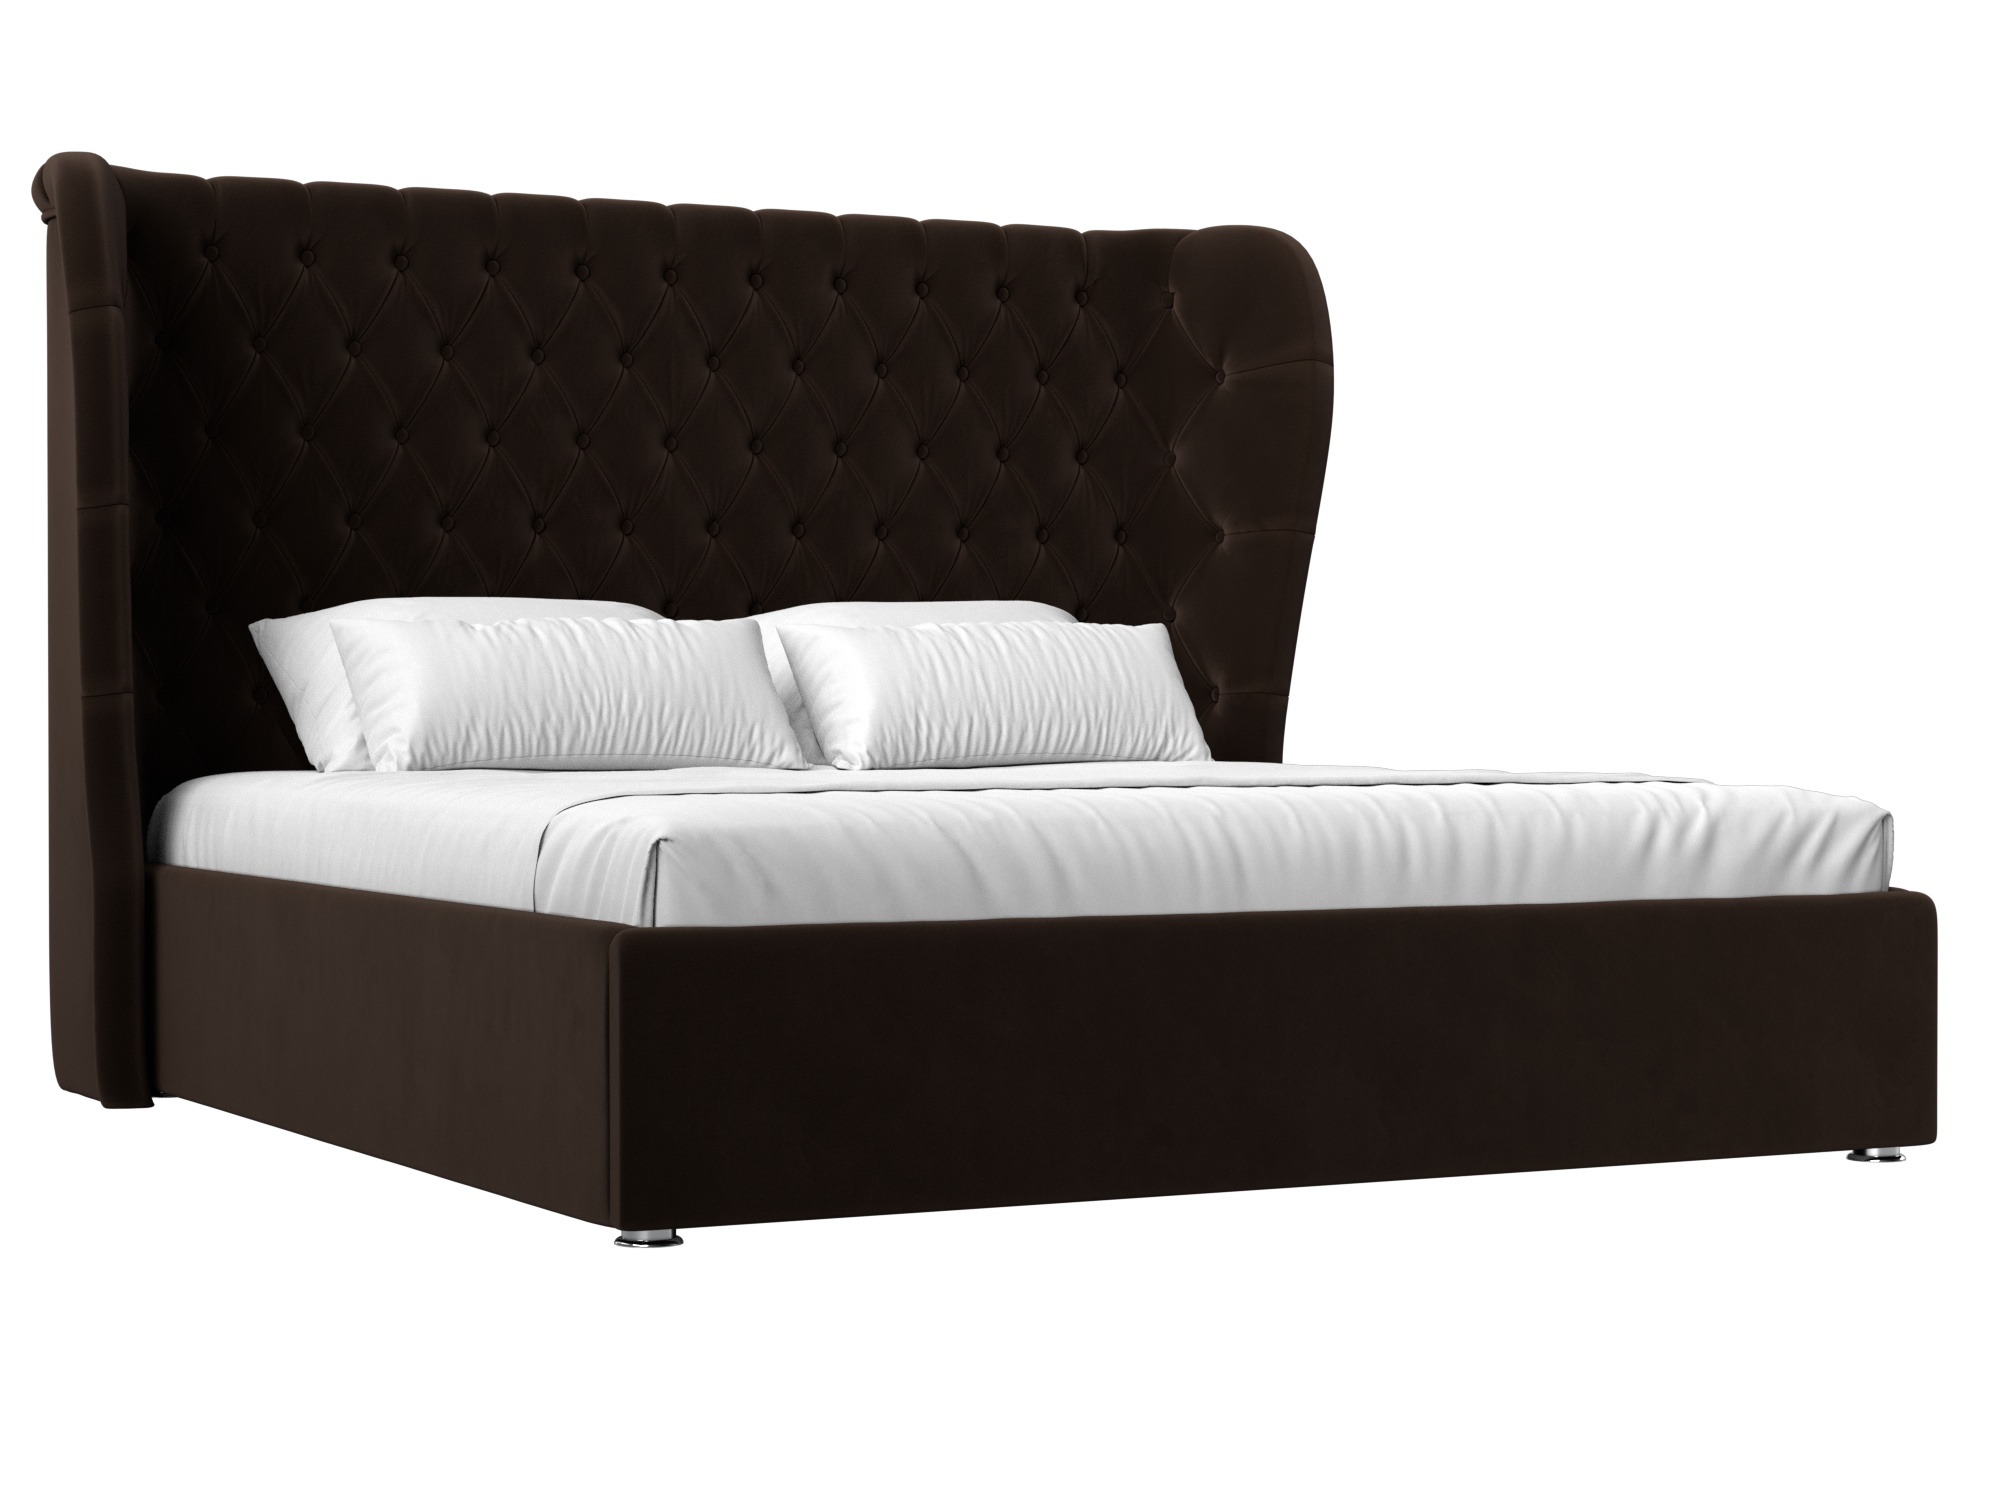 Кровать Далия (160х200) Коричневый, ЛДСП кровать далия 160 серый рогожка